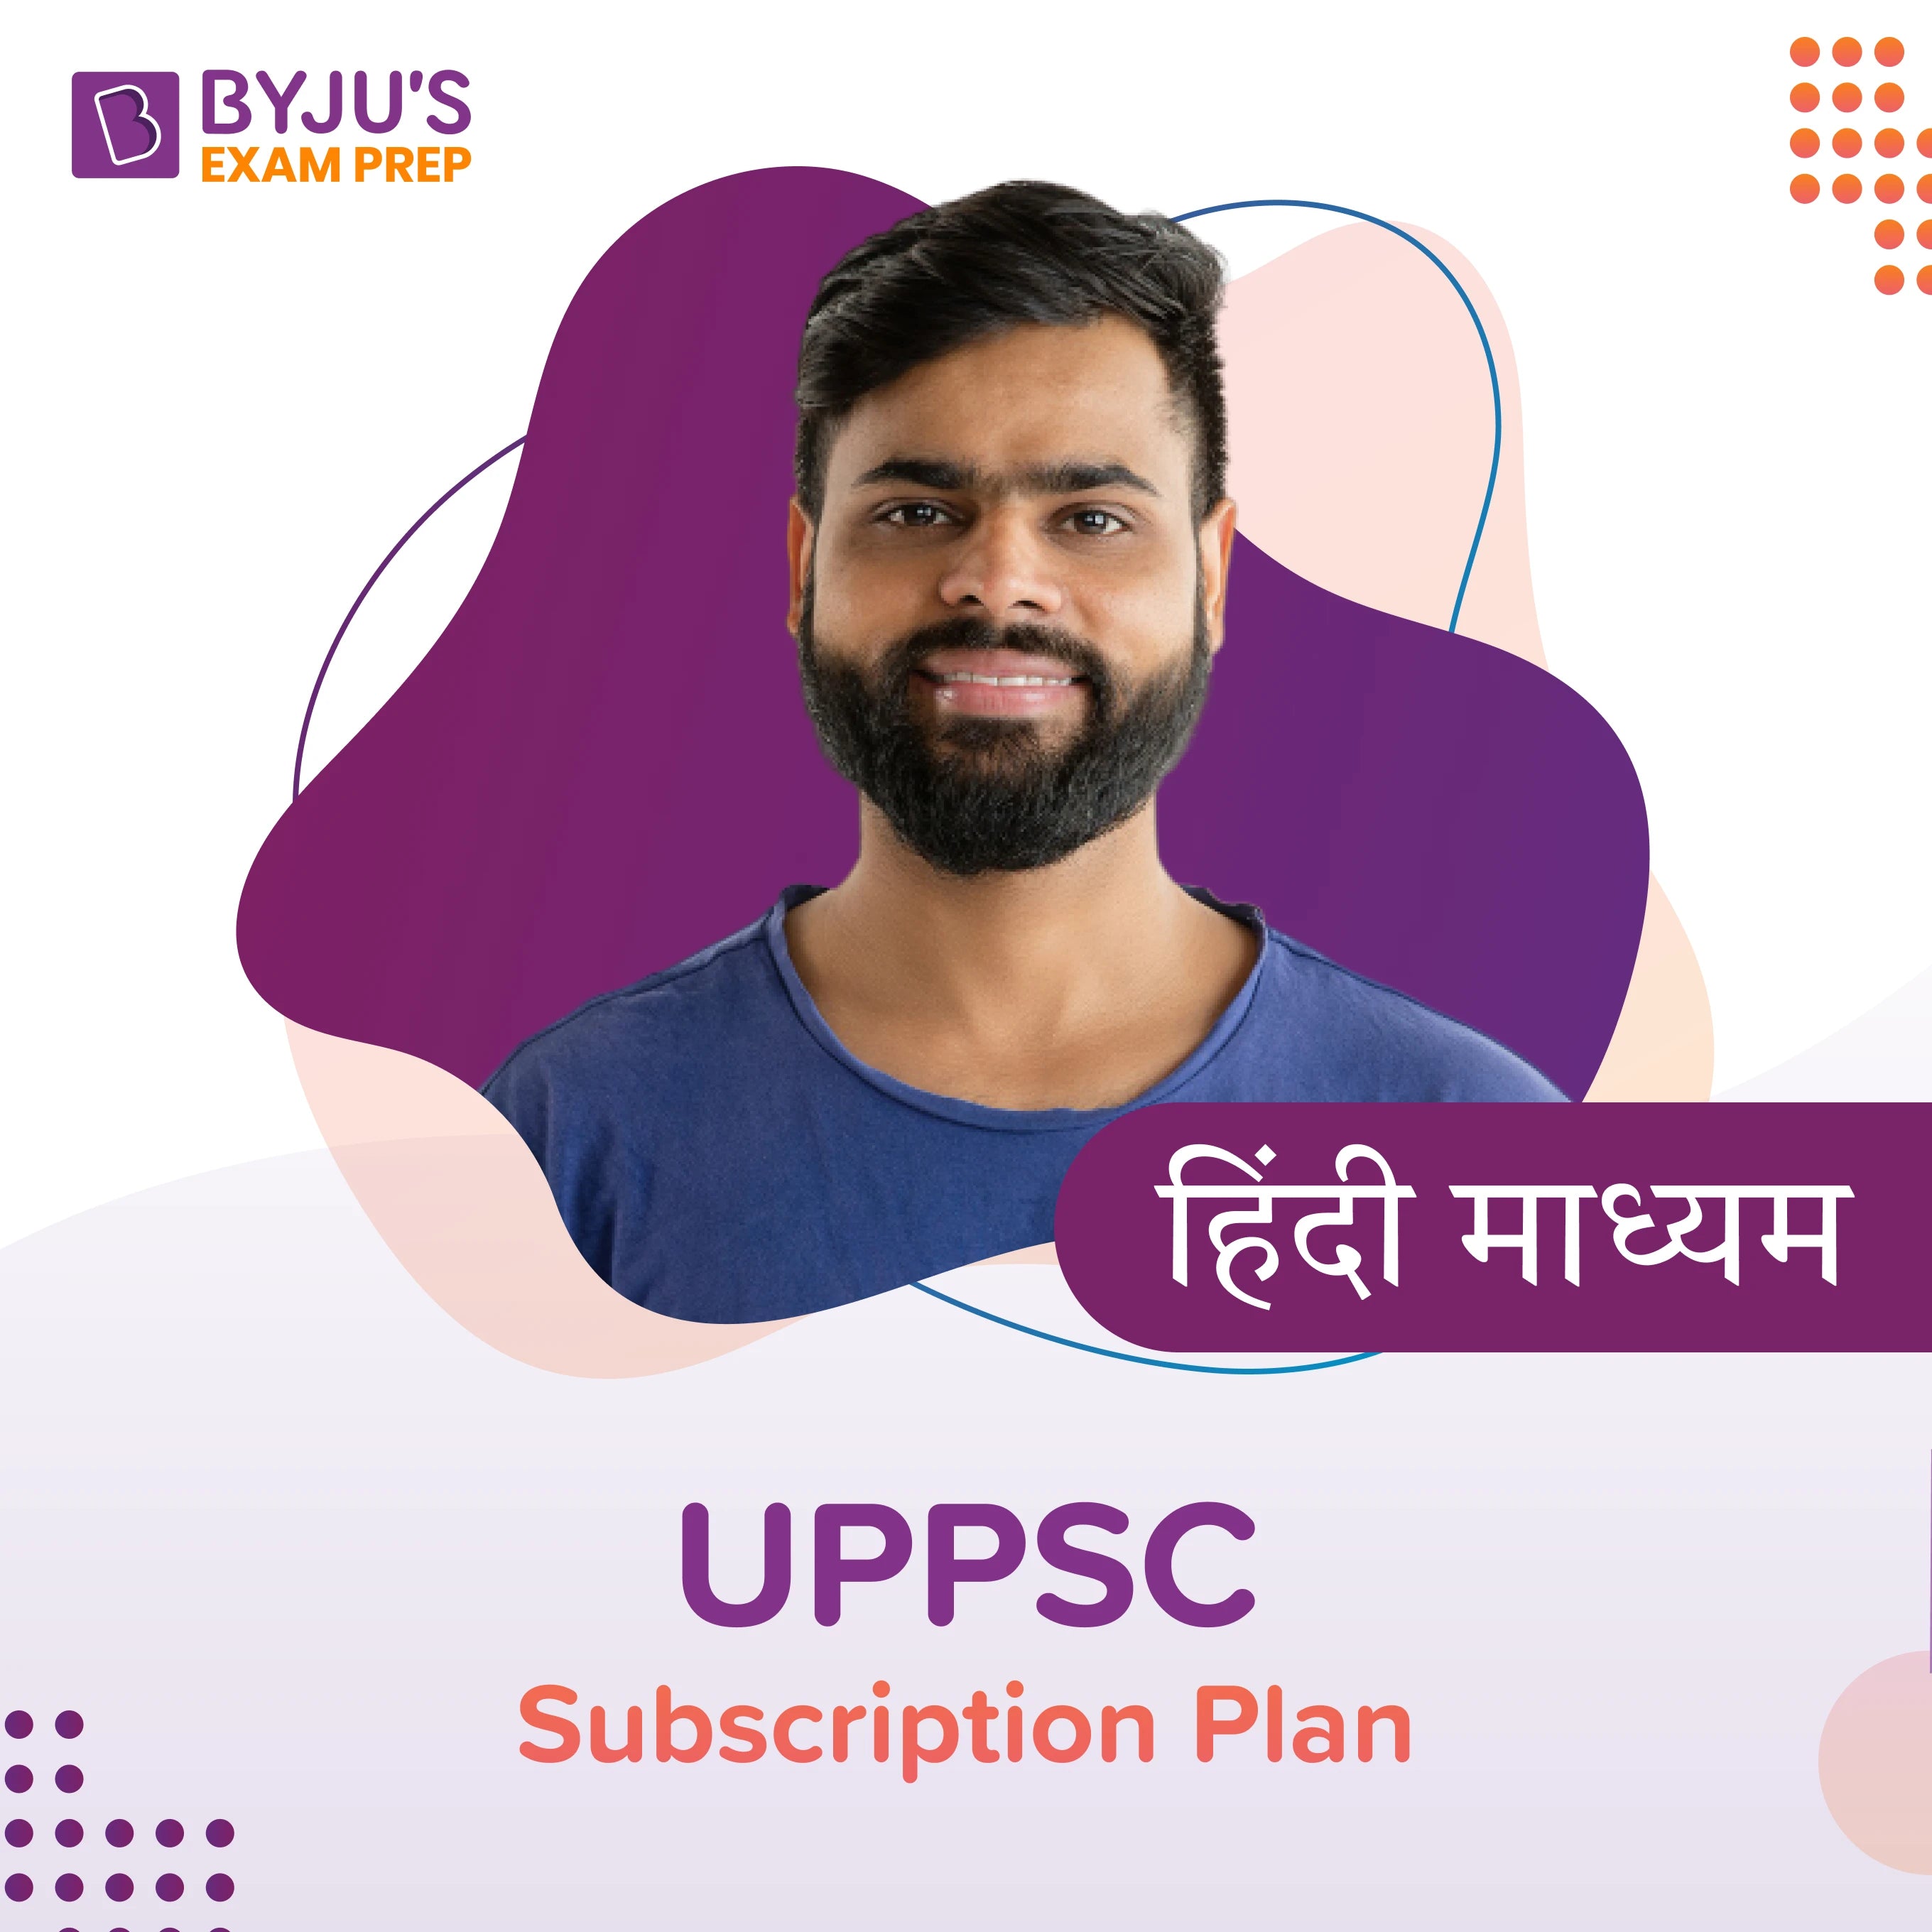 UPPSC - Subscription Plan